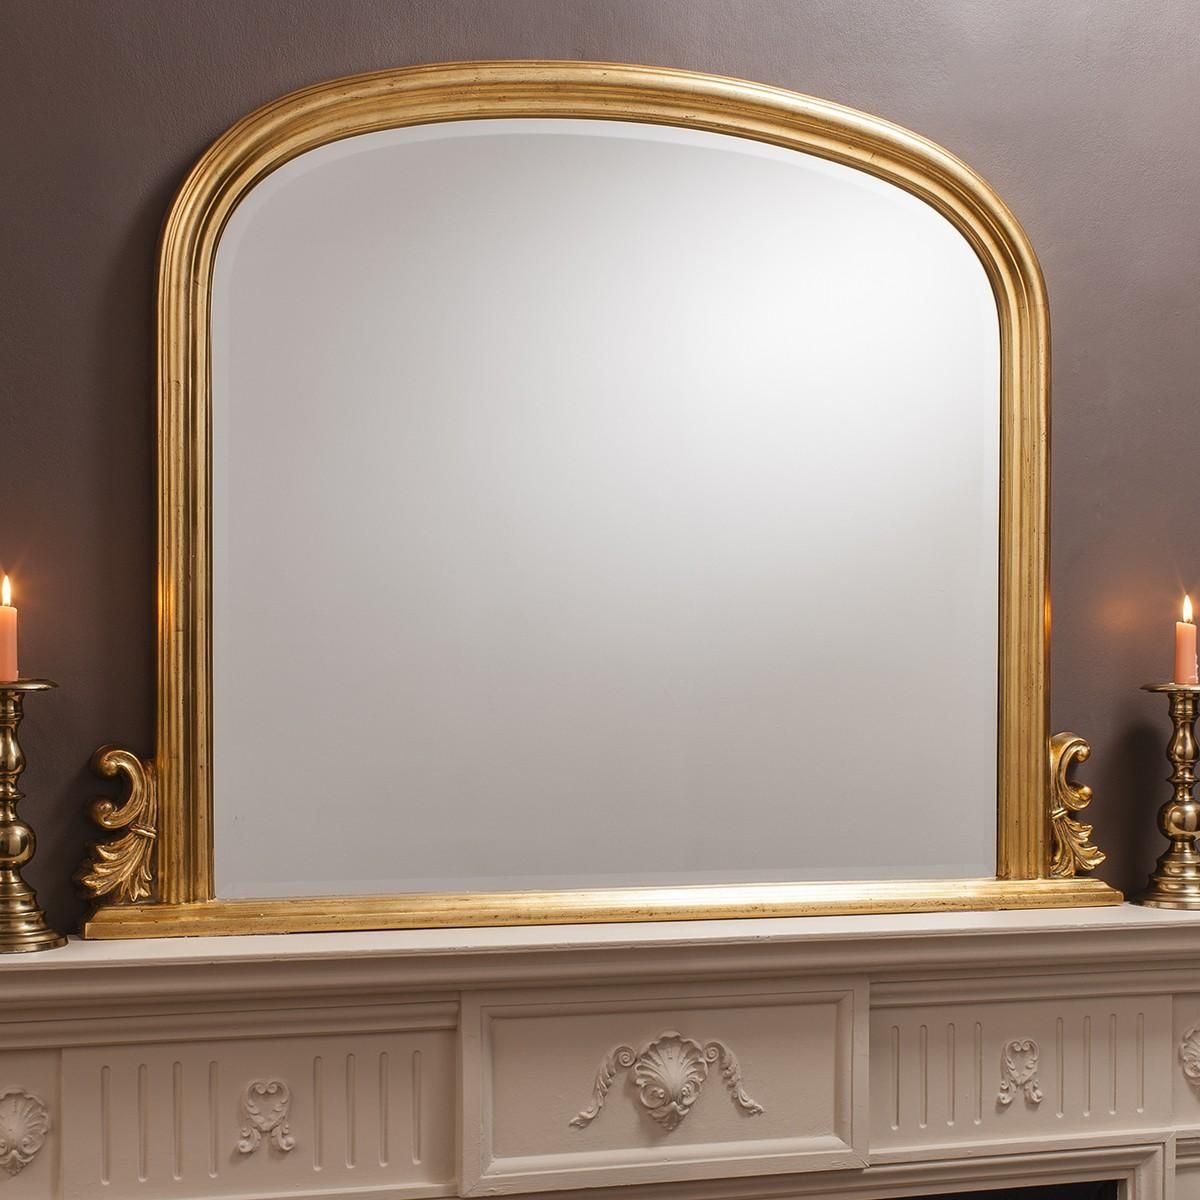 Grace Overmantle Mirror From £249 – Luxury Overmantle Mirrors With Regard To Overmantle Mirror (View 16 of 20)